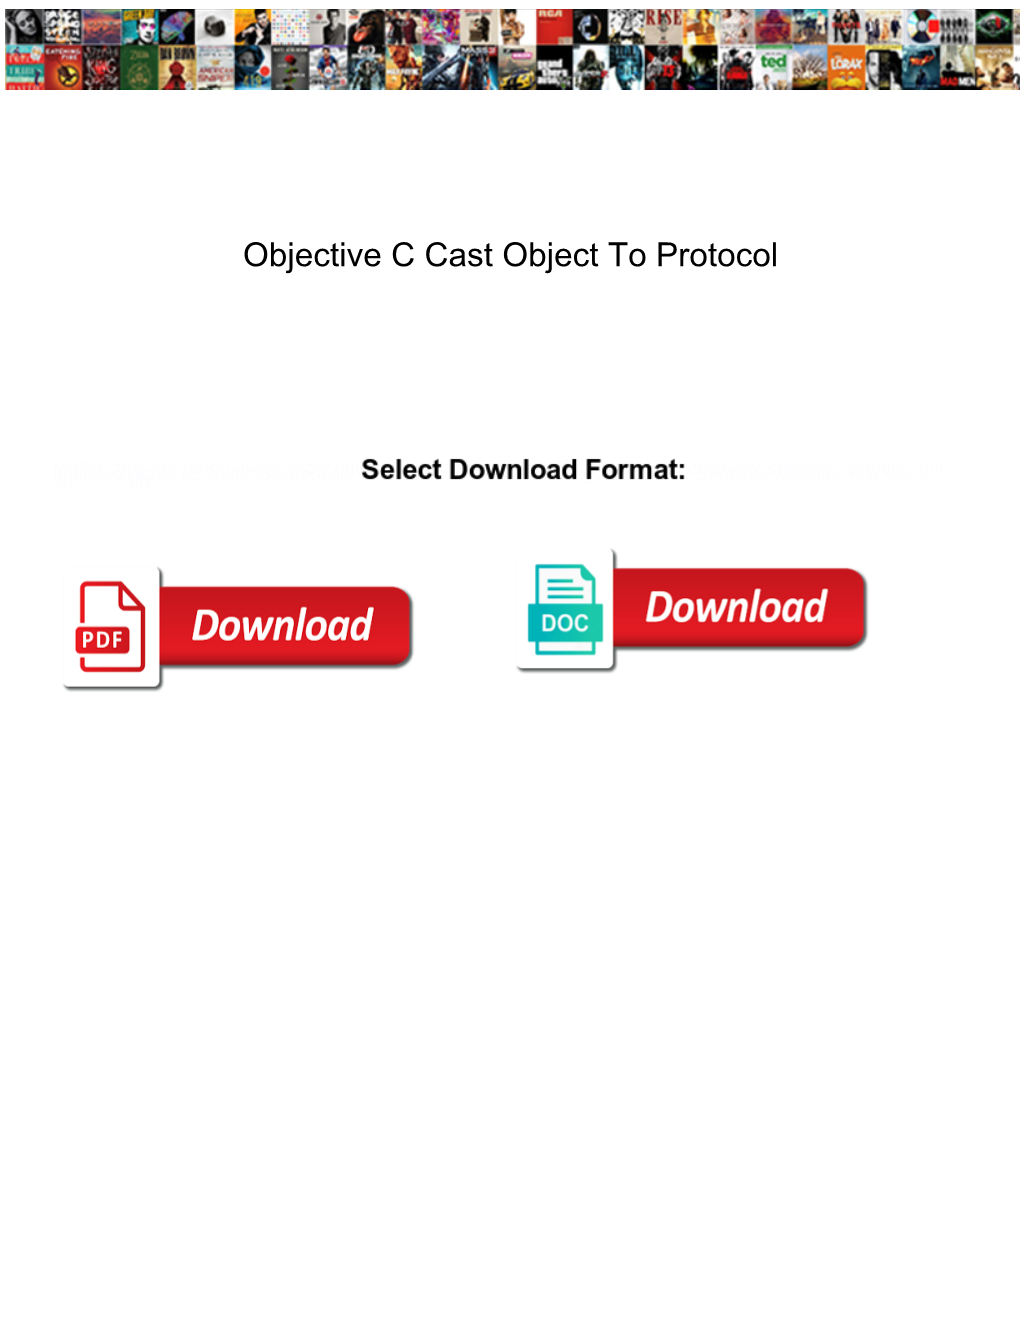 Objective C Cast Object to Protocol